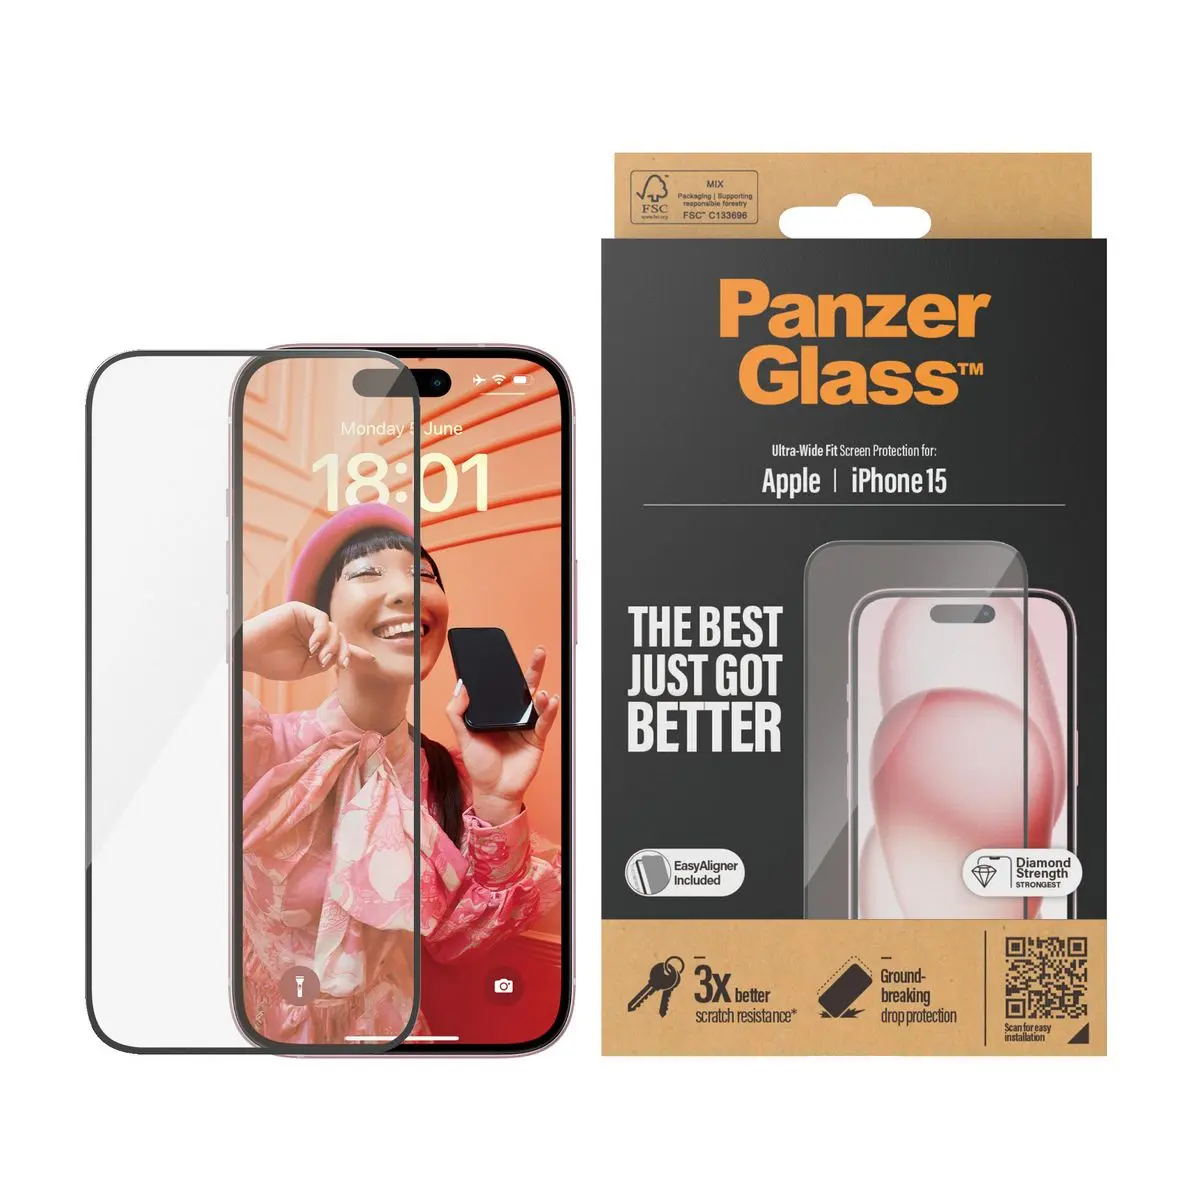 Panzerglass zaštitno staklo iPhone 15 ultra wide fit image